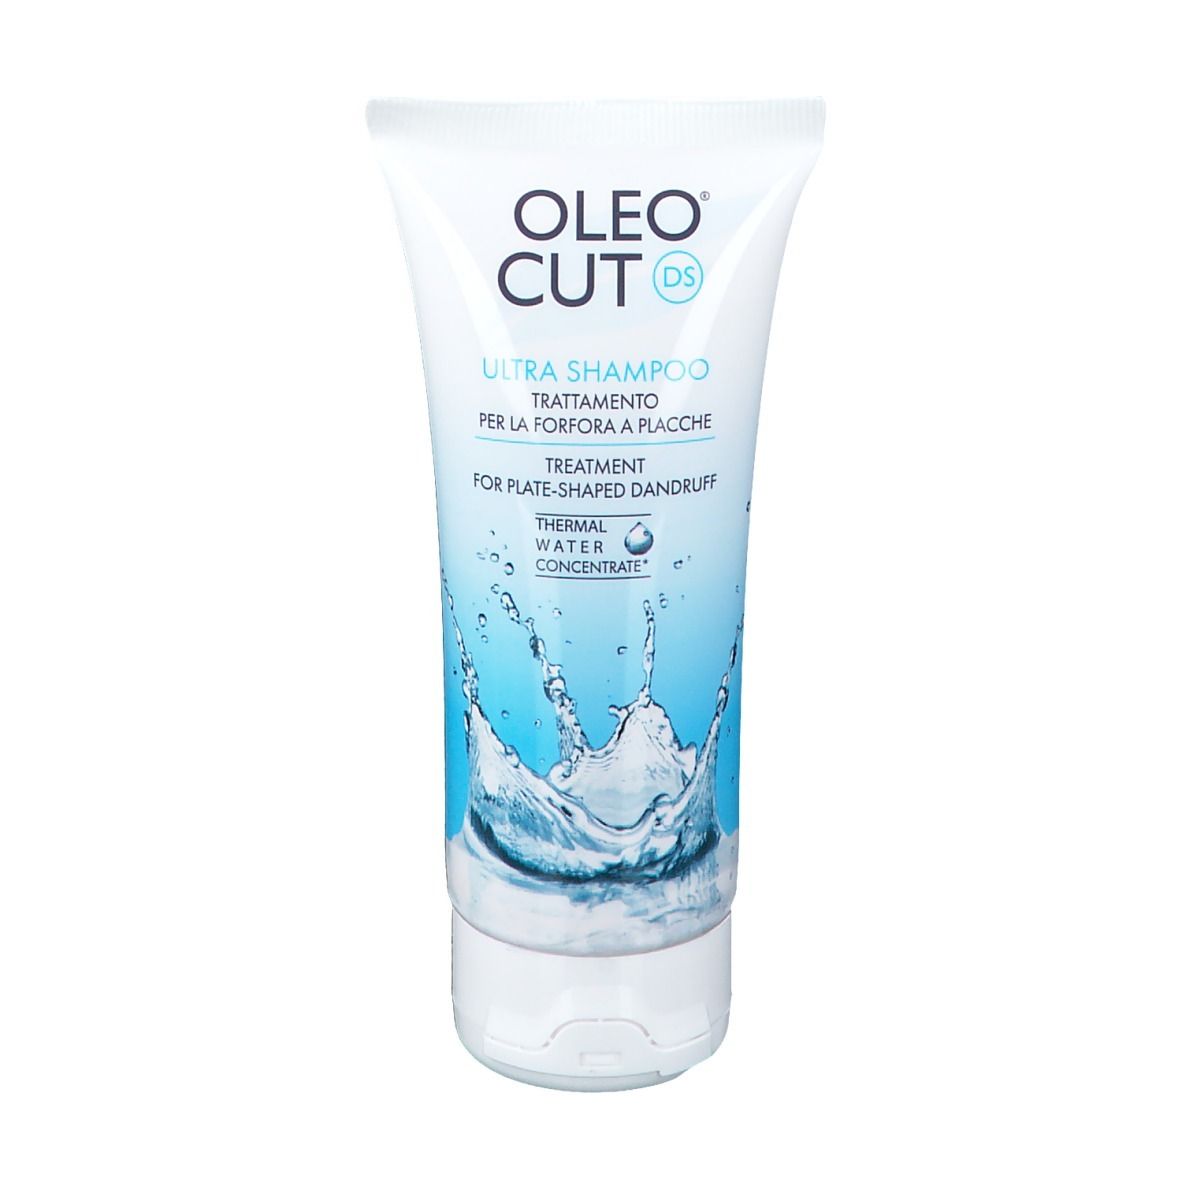 Morgan Srl OLEO® CUT Ds Ultra Shampoo 100 ml Shampoo